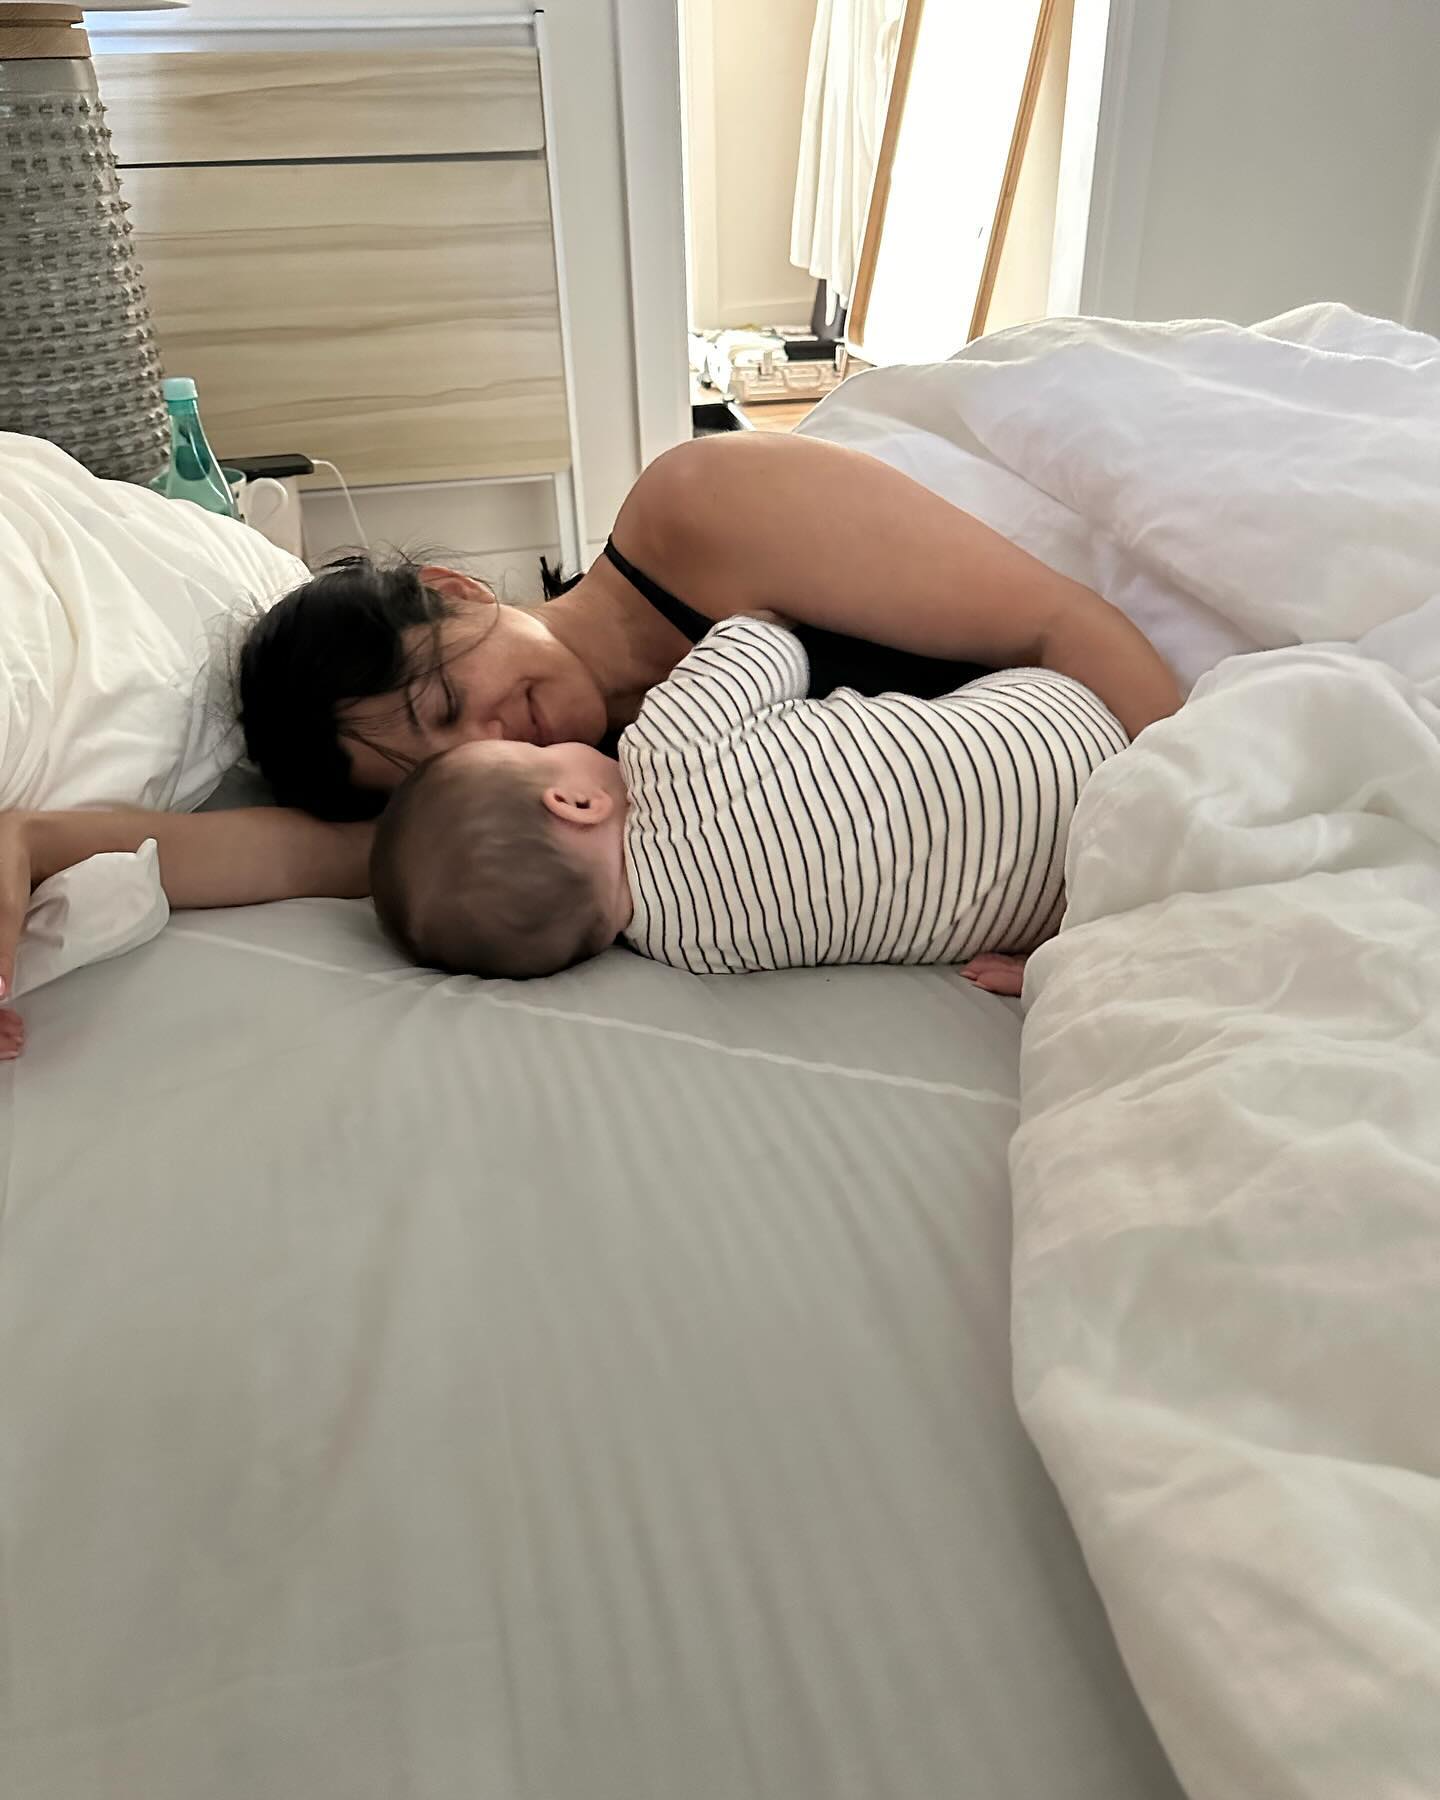 Kourtney Kardashian's parenting style was recently criticized by fans